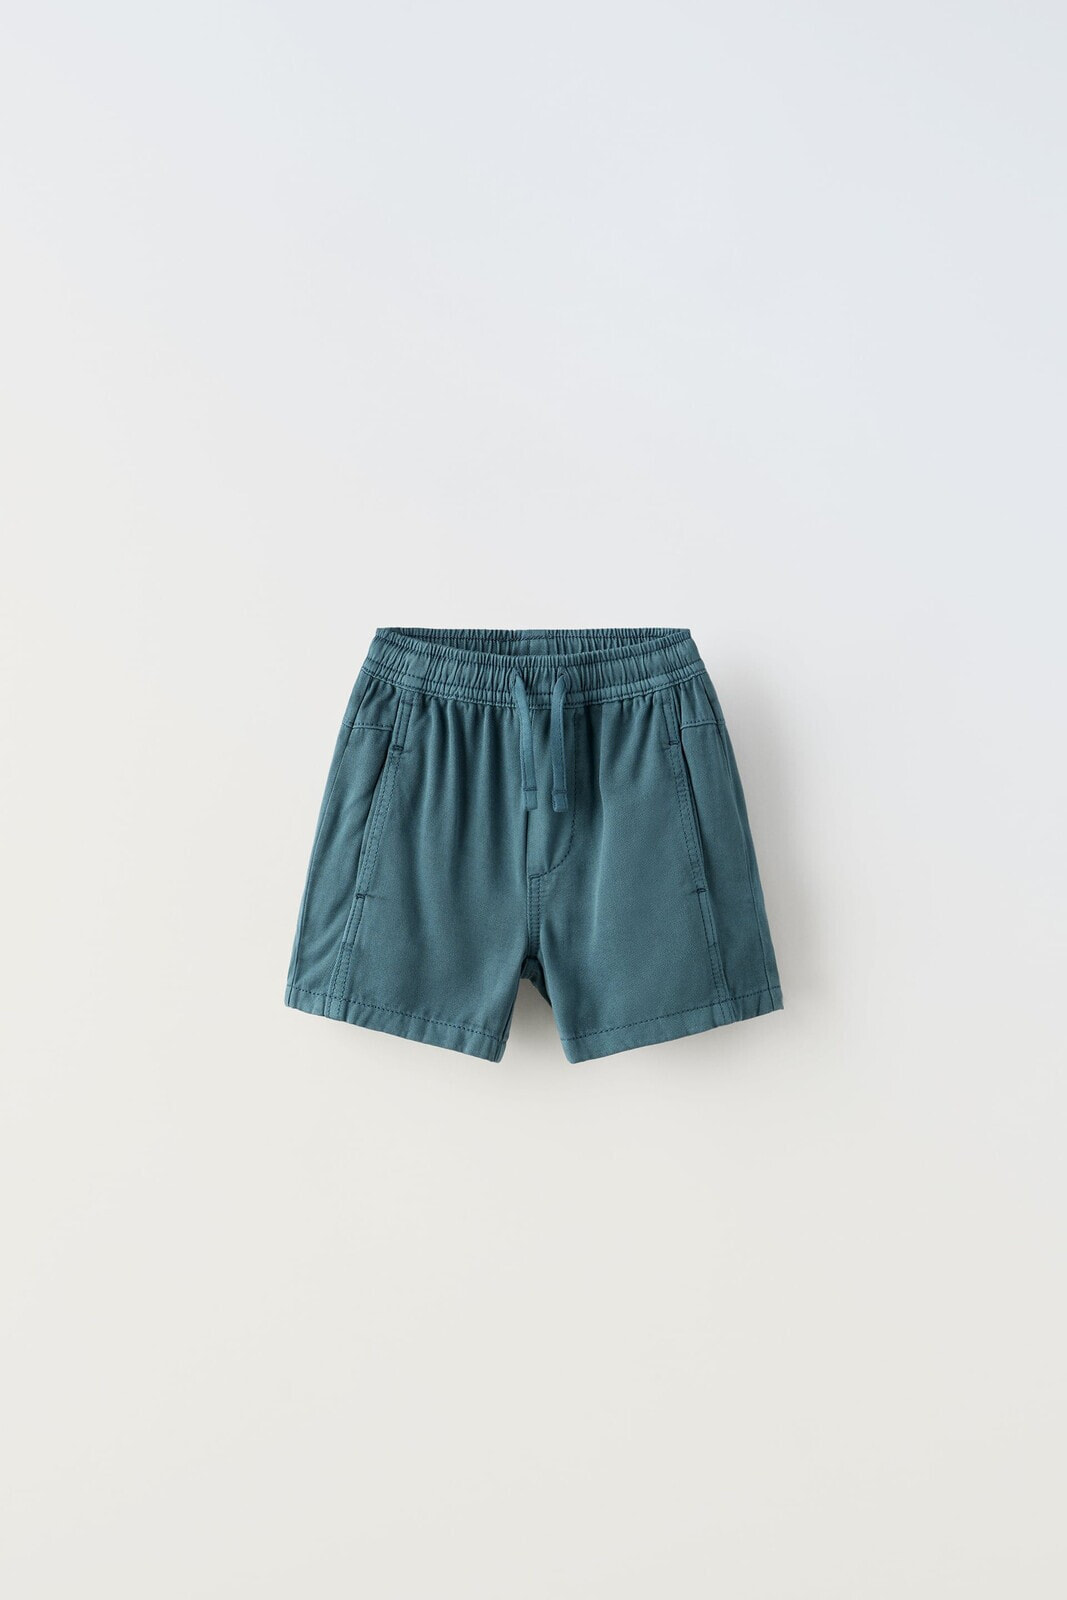 Flowing bermuda shorts